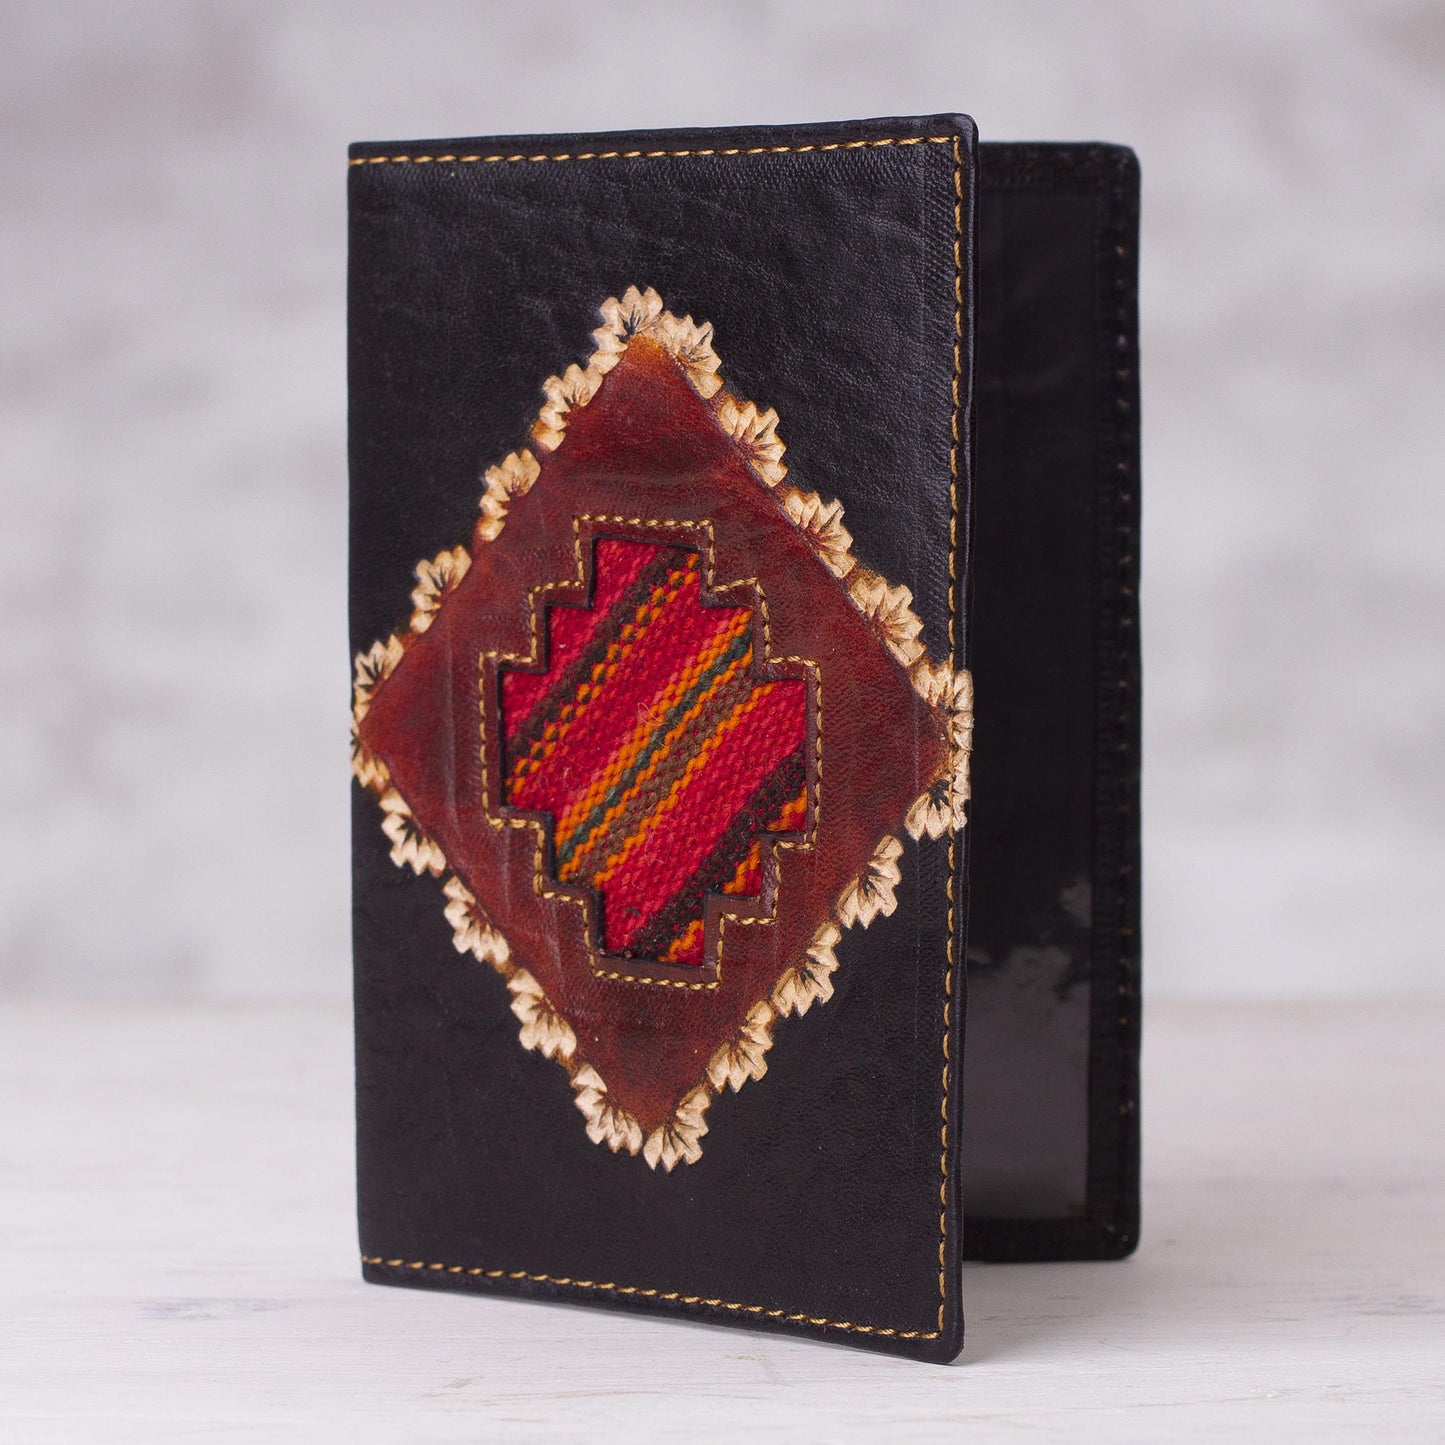 Inca Traveler Dark Brown Leather Passport Cover with Incan Cross Design